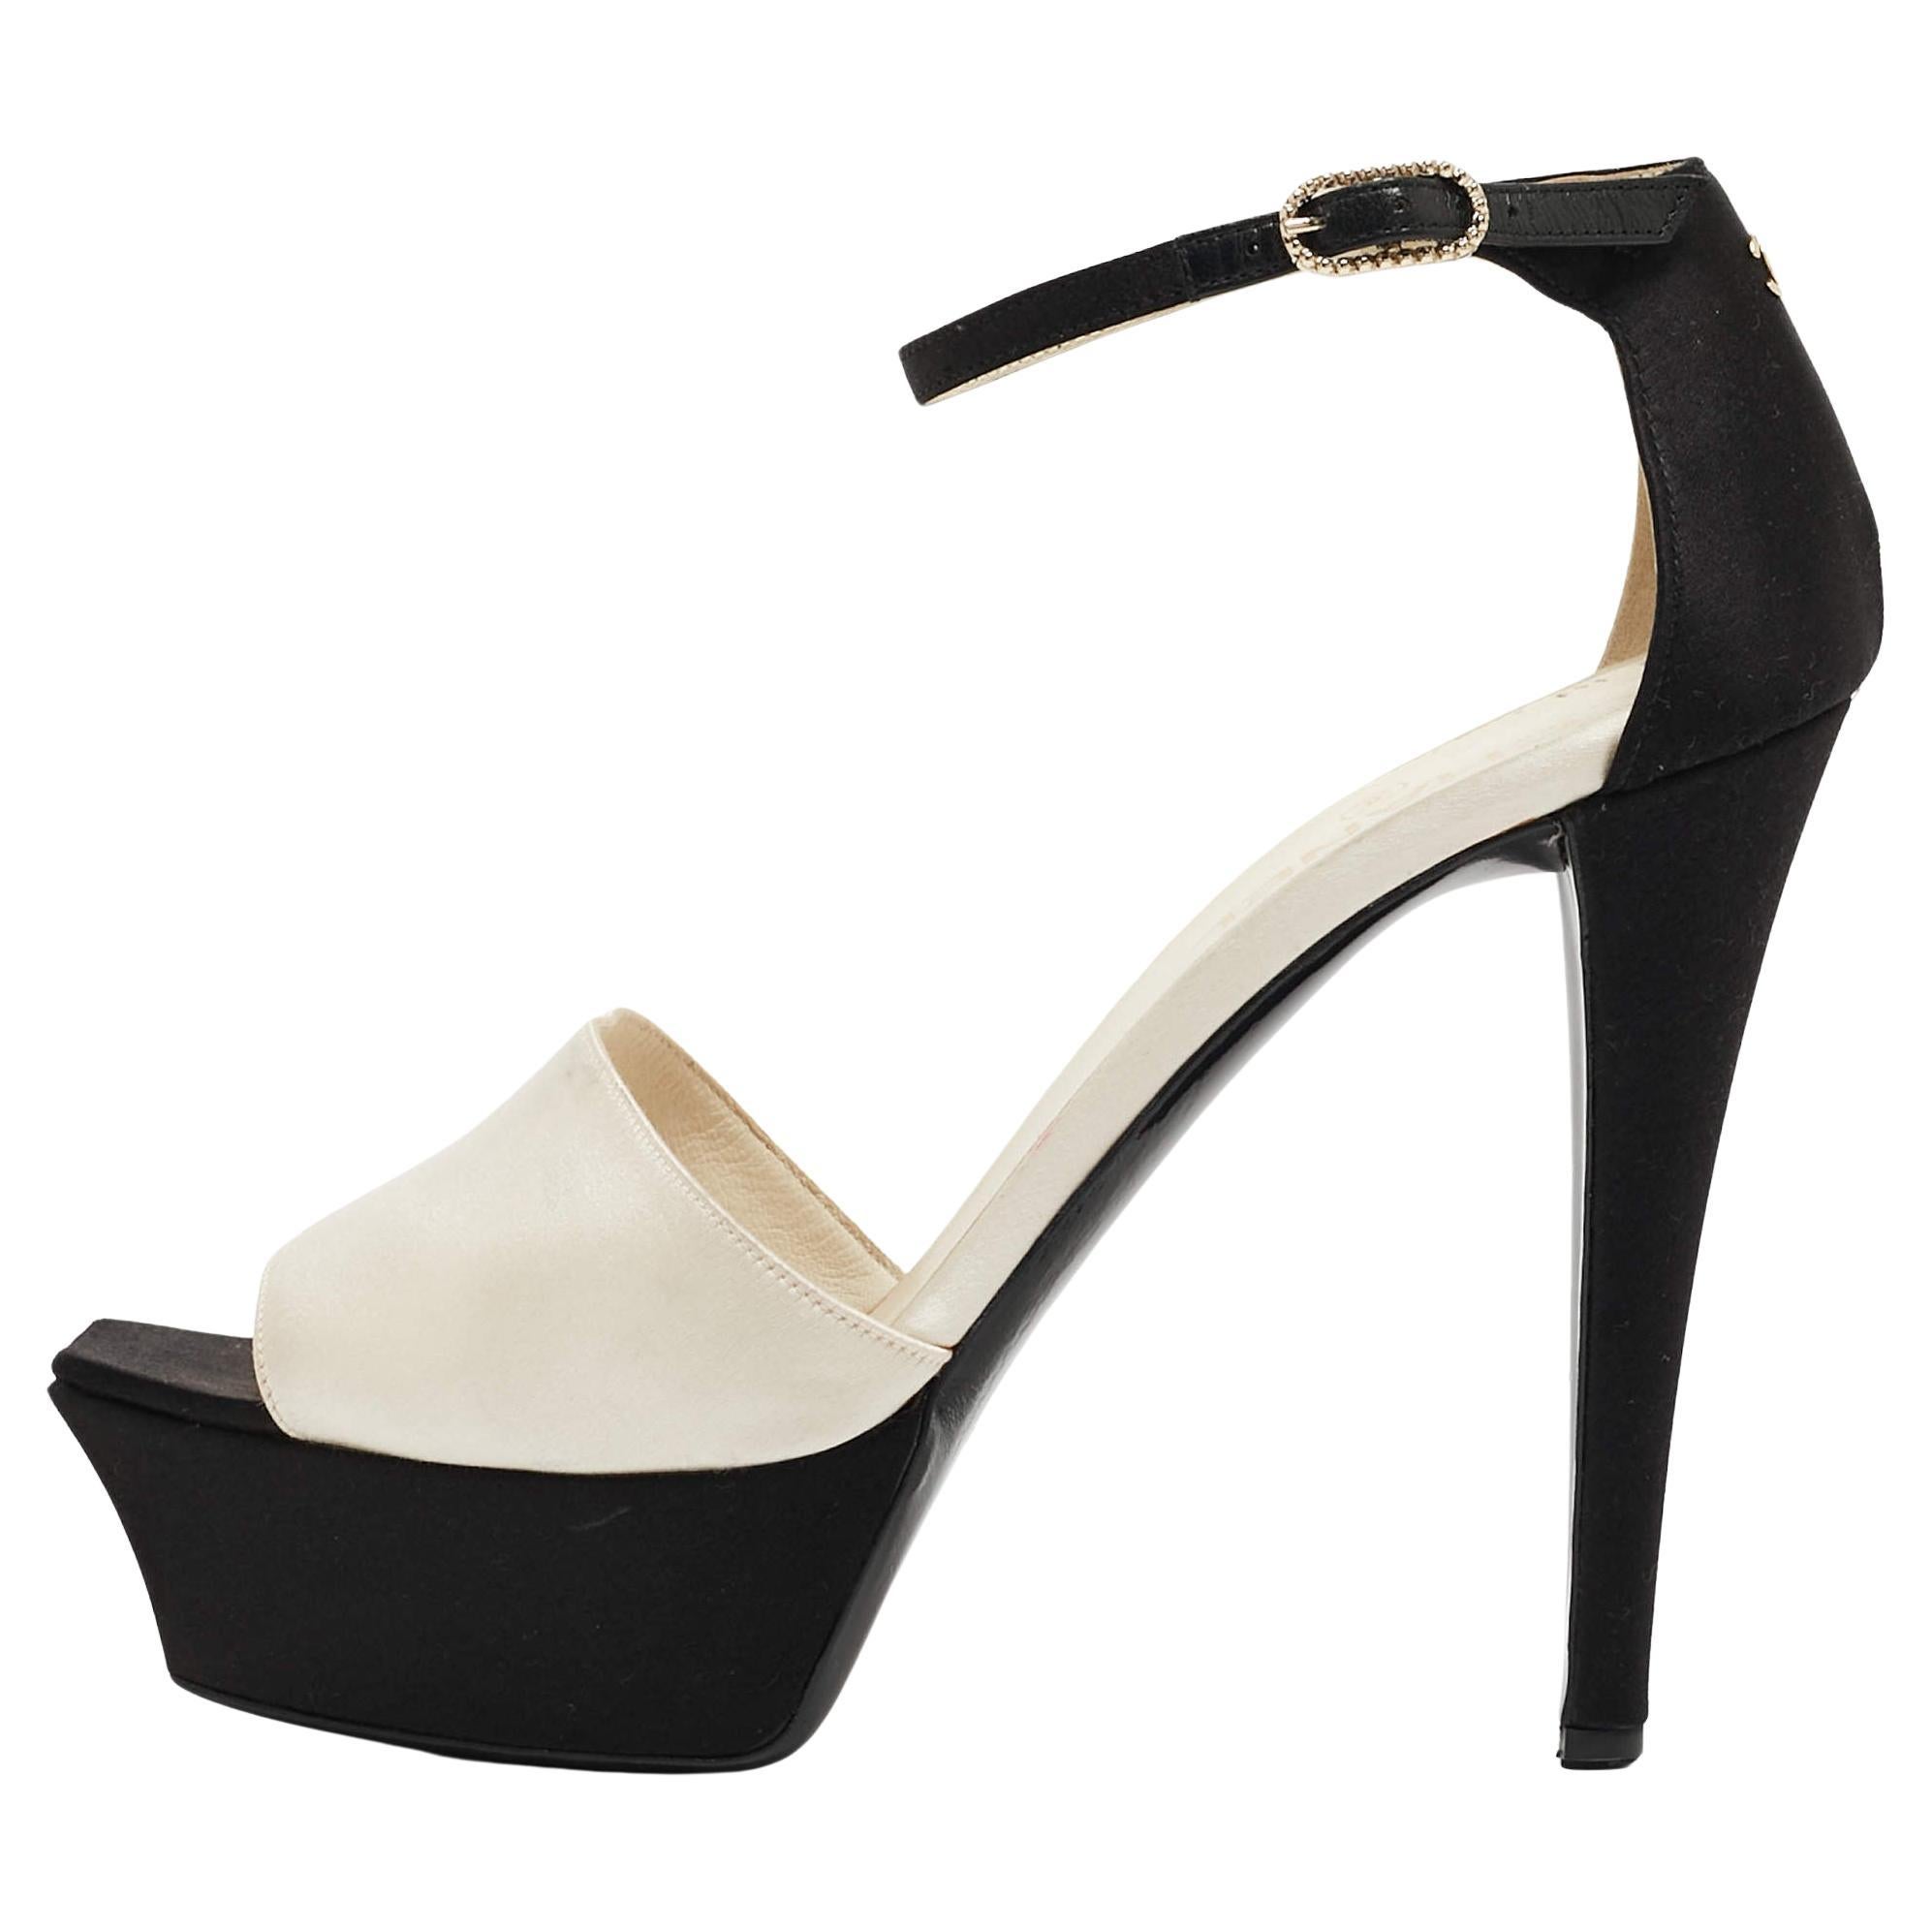  Chanel White/Black Satin Peep Toe Sandals Size 39.5 For Sale